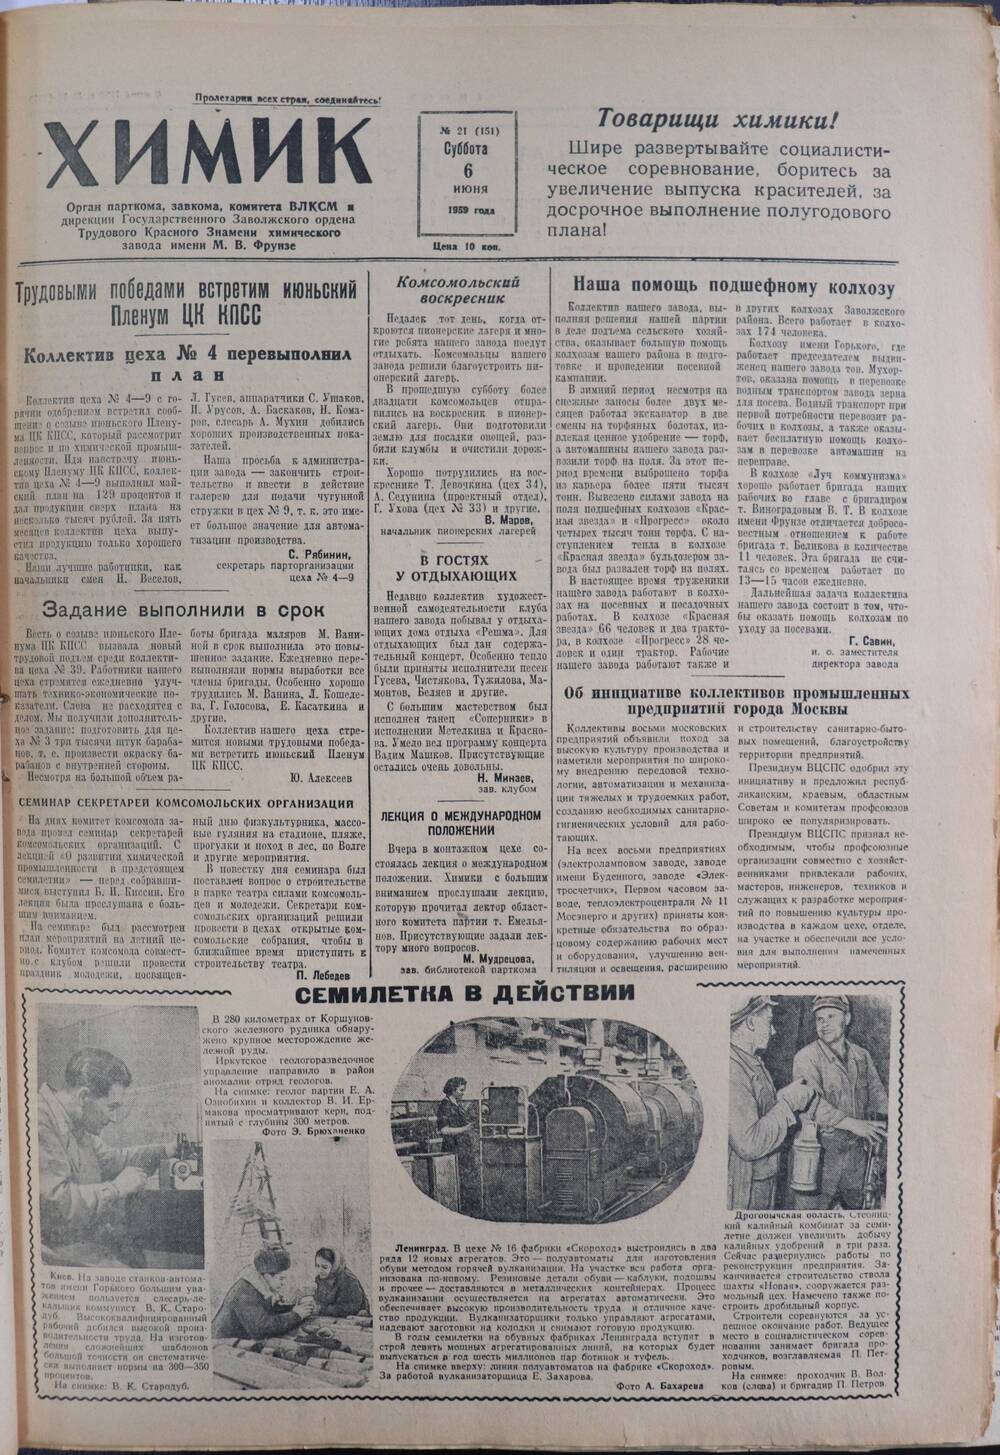 Газета «Химик» № 21 от 6 июня 1959 года.